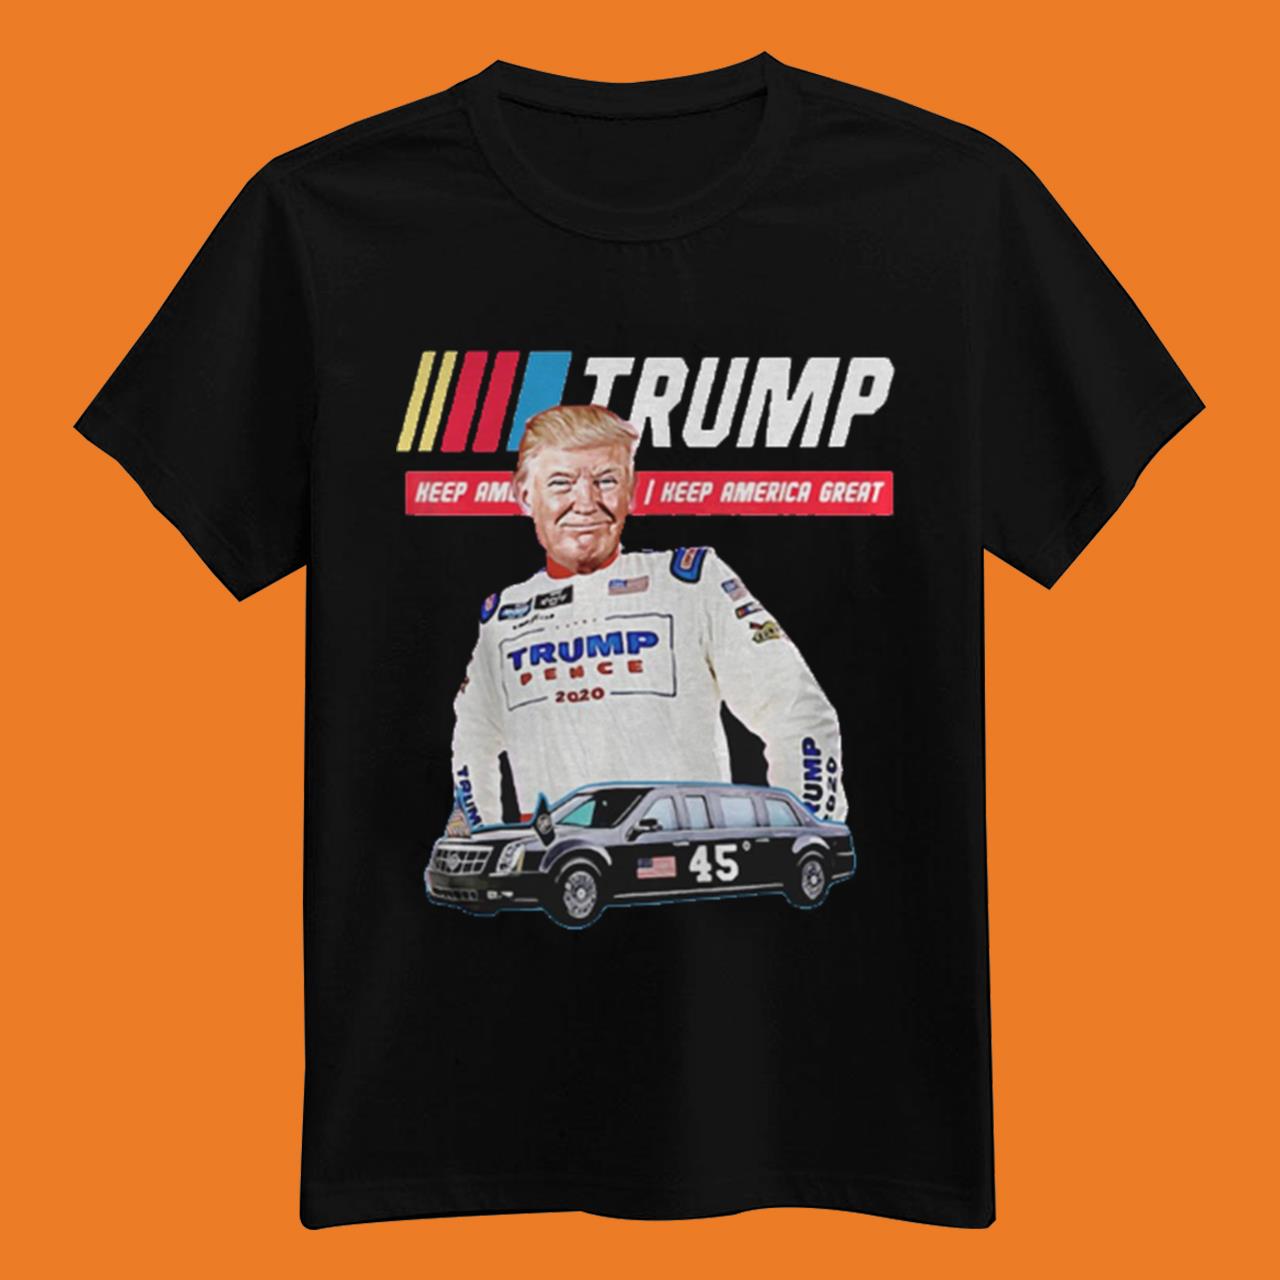 Donald Trump The Beast Presidential Limo Race Car 45 Shirt